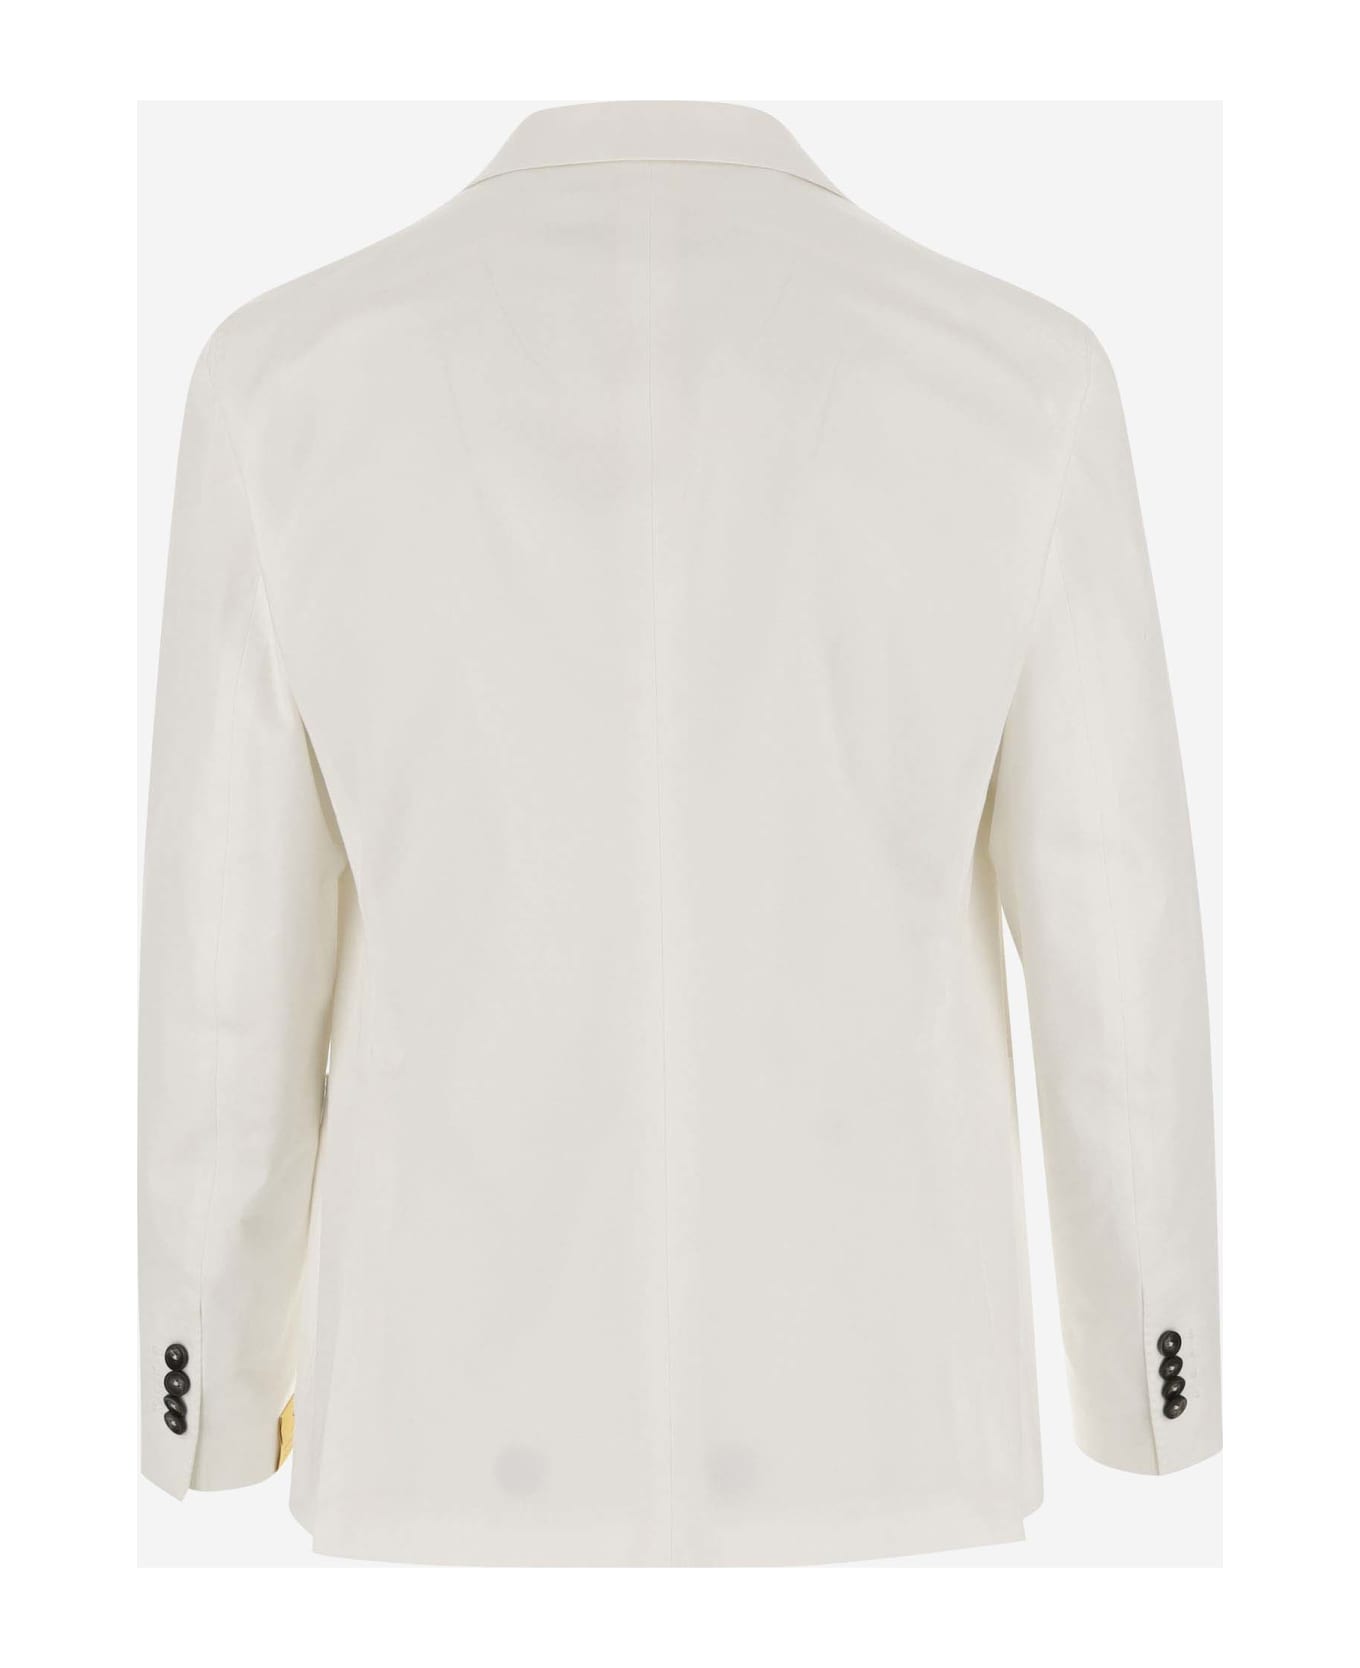 Tagliatore Single-breasted Stretch Cotton Jacket - White